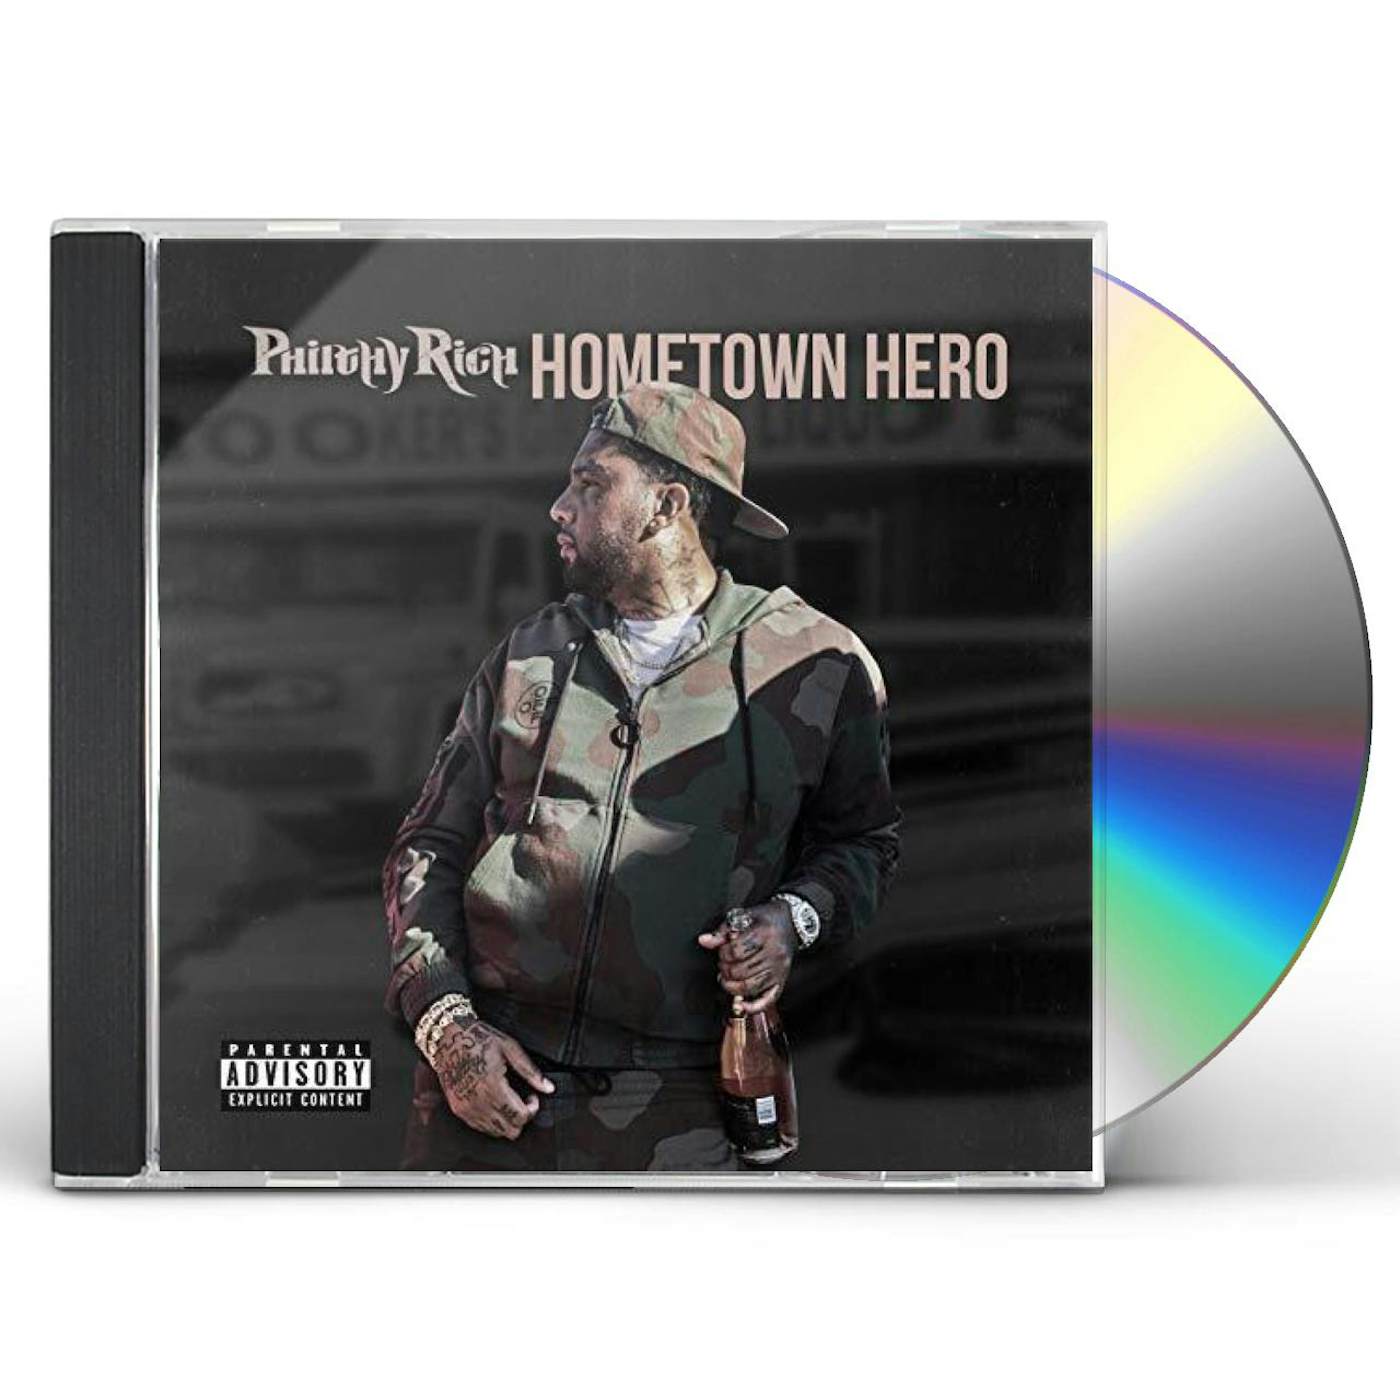 Philthy Rich HOMETOWN HERO CD